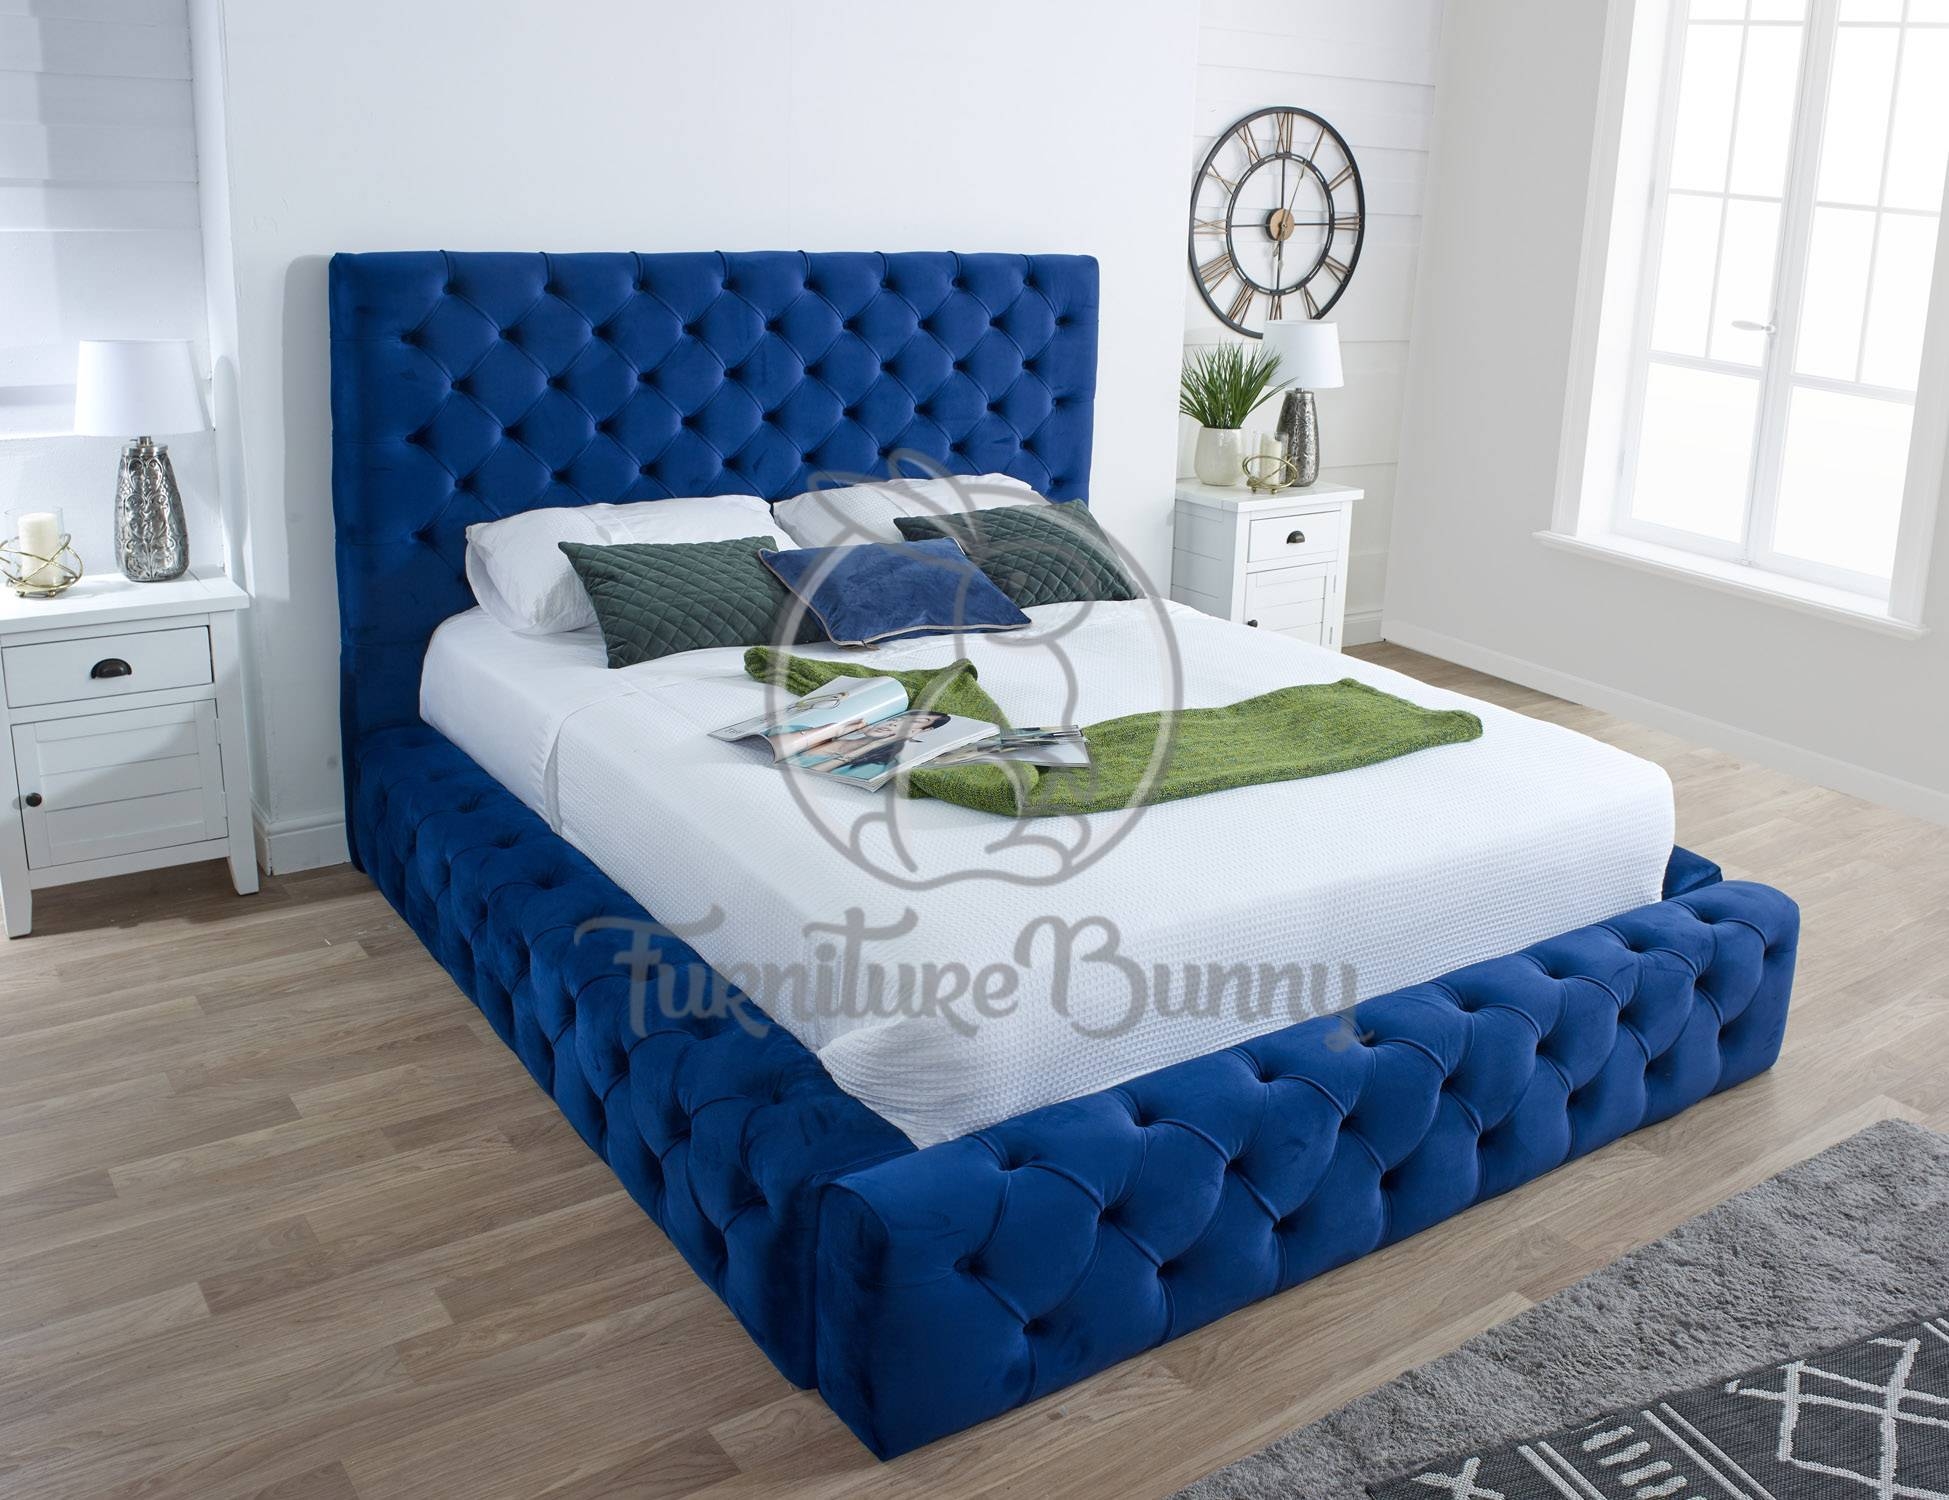 The Ambassador Bed – Furniture Bunny